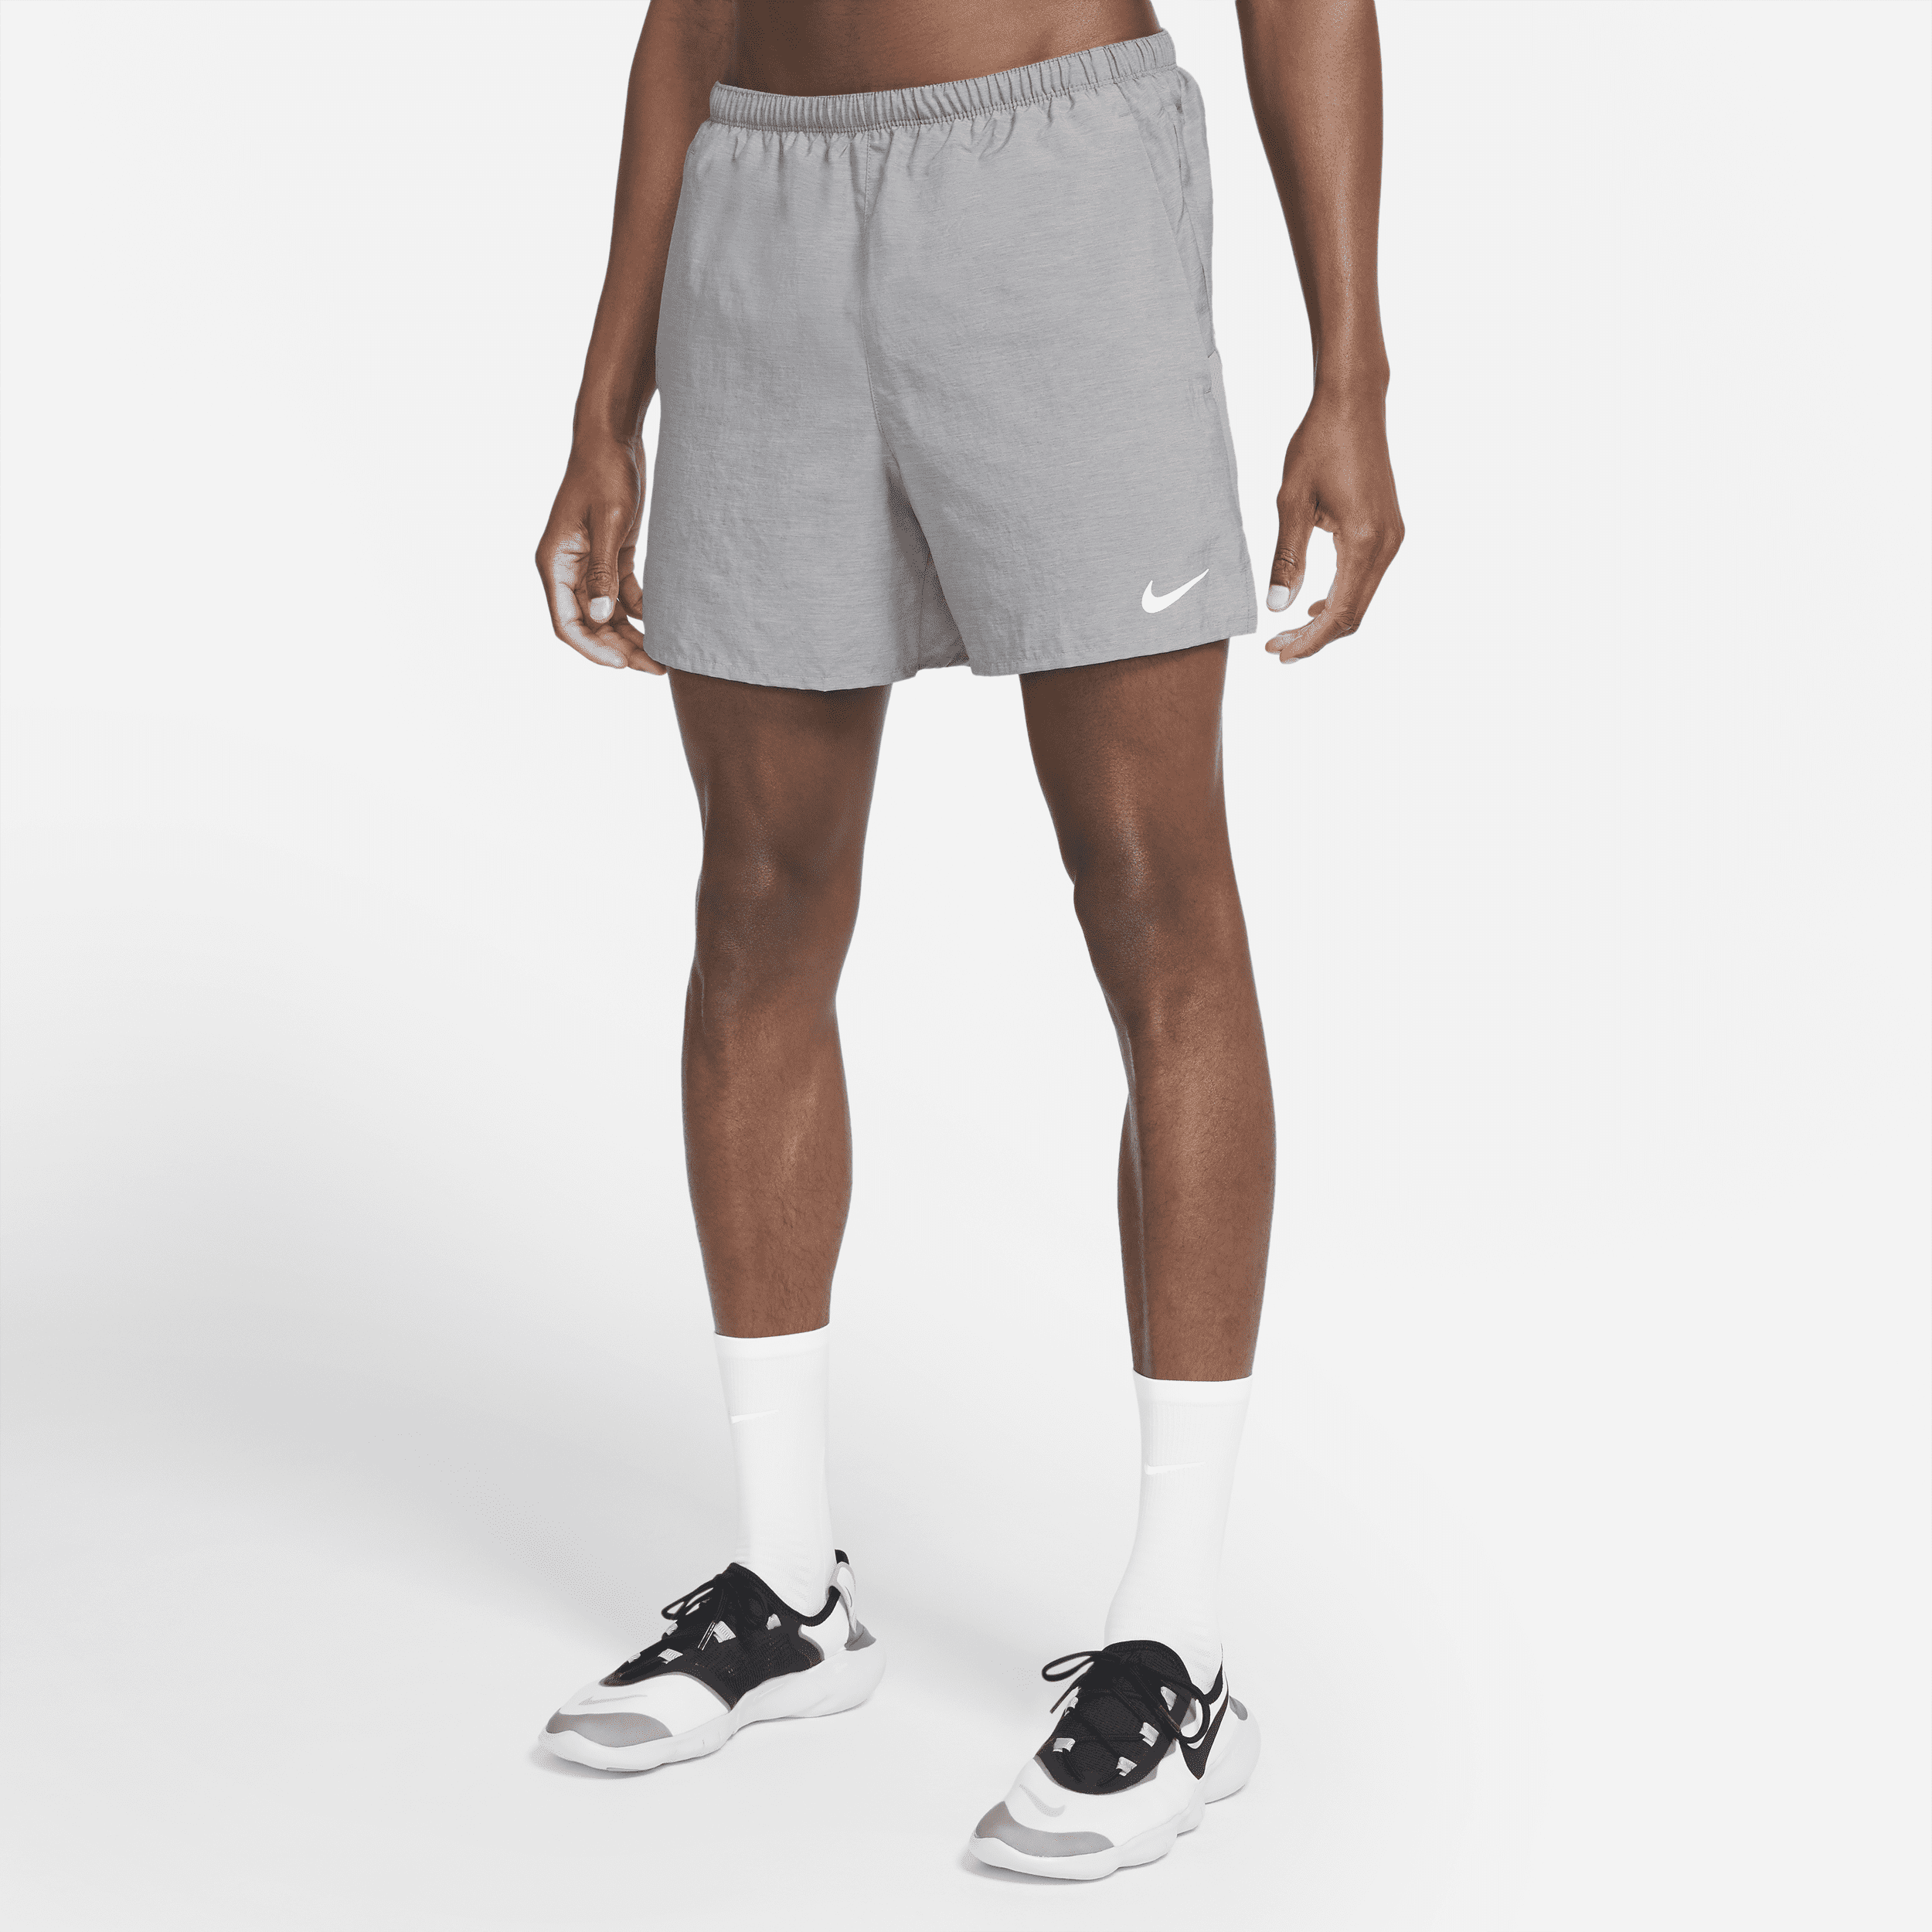 Shorts da running con slip foderati 13 cm Nike Challenger - Uomo - Grigio